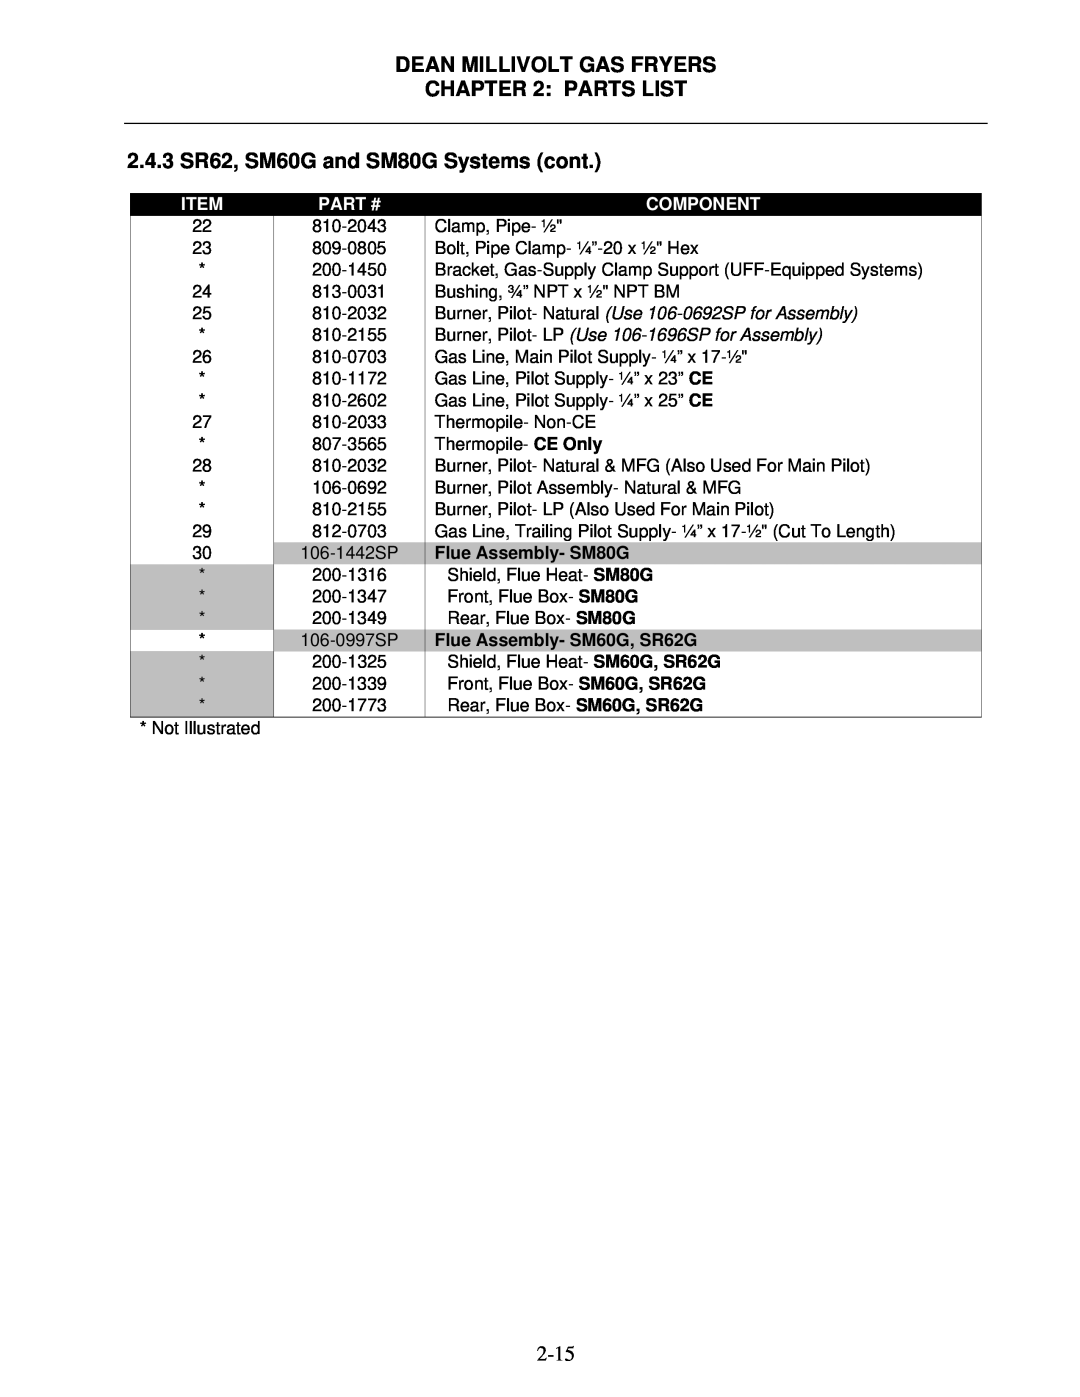 Frymaster Super Runner Series manual Dean Millivolt Gas Fryers : Parts List, 2.4.3 SR62, SM60G and SM80G Systems cont, Item 